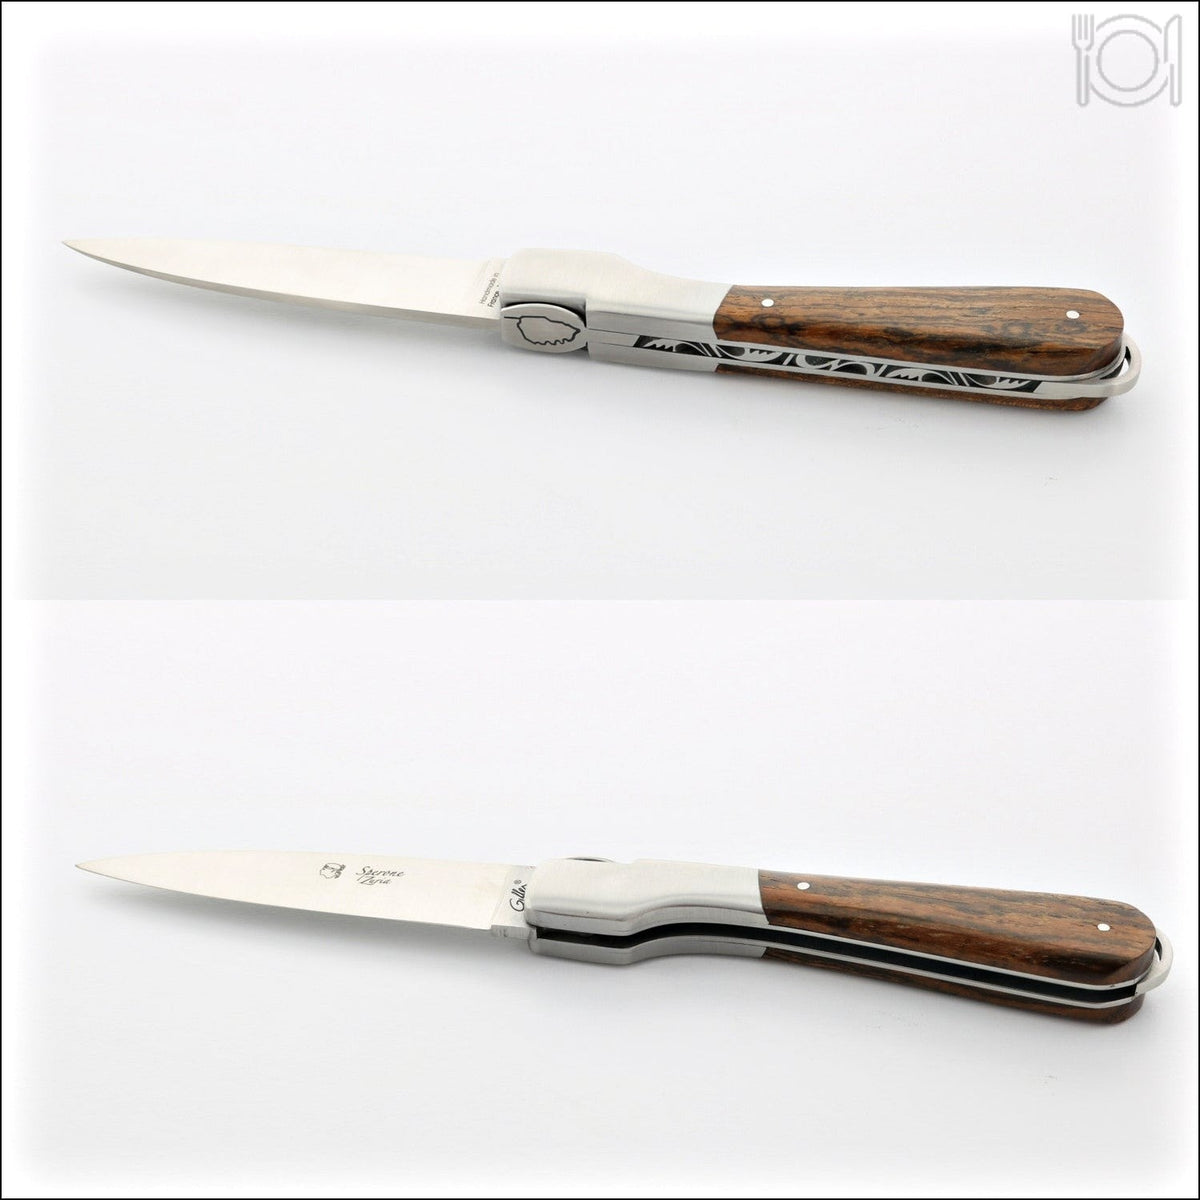 Corsican Sperone Pocket Knife Bocote